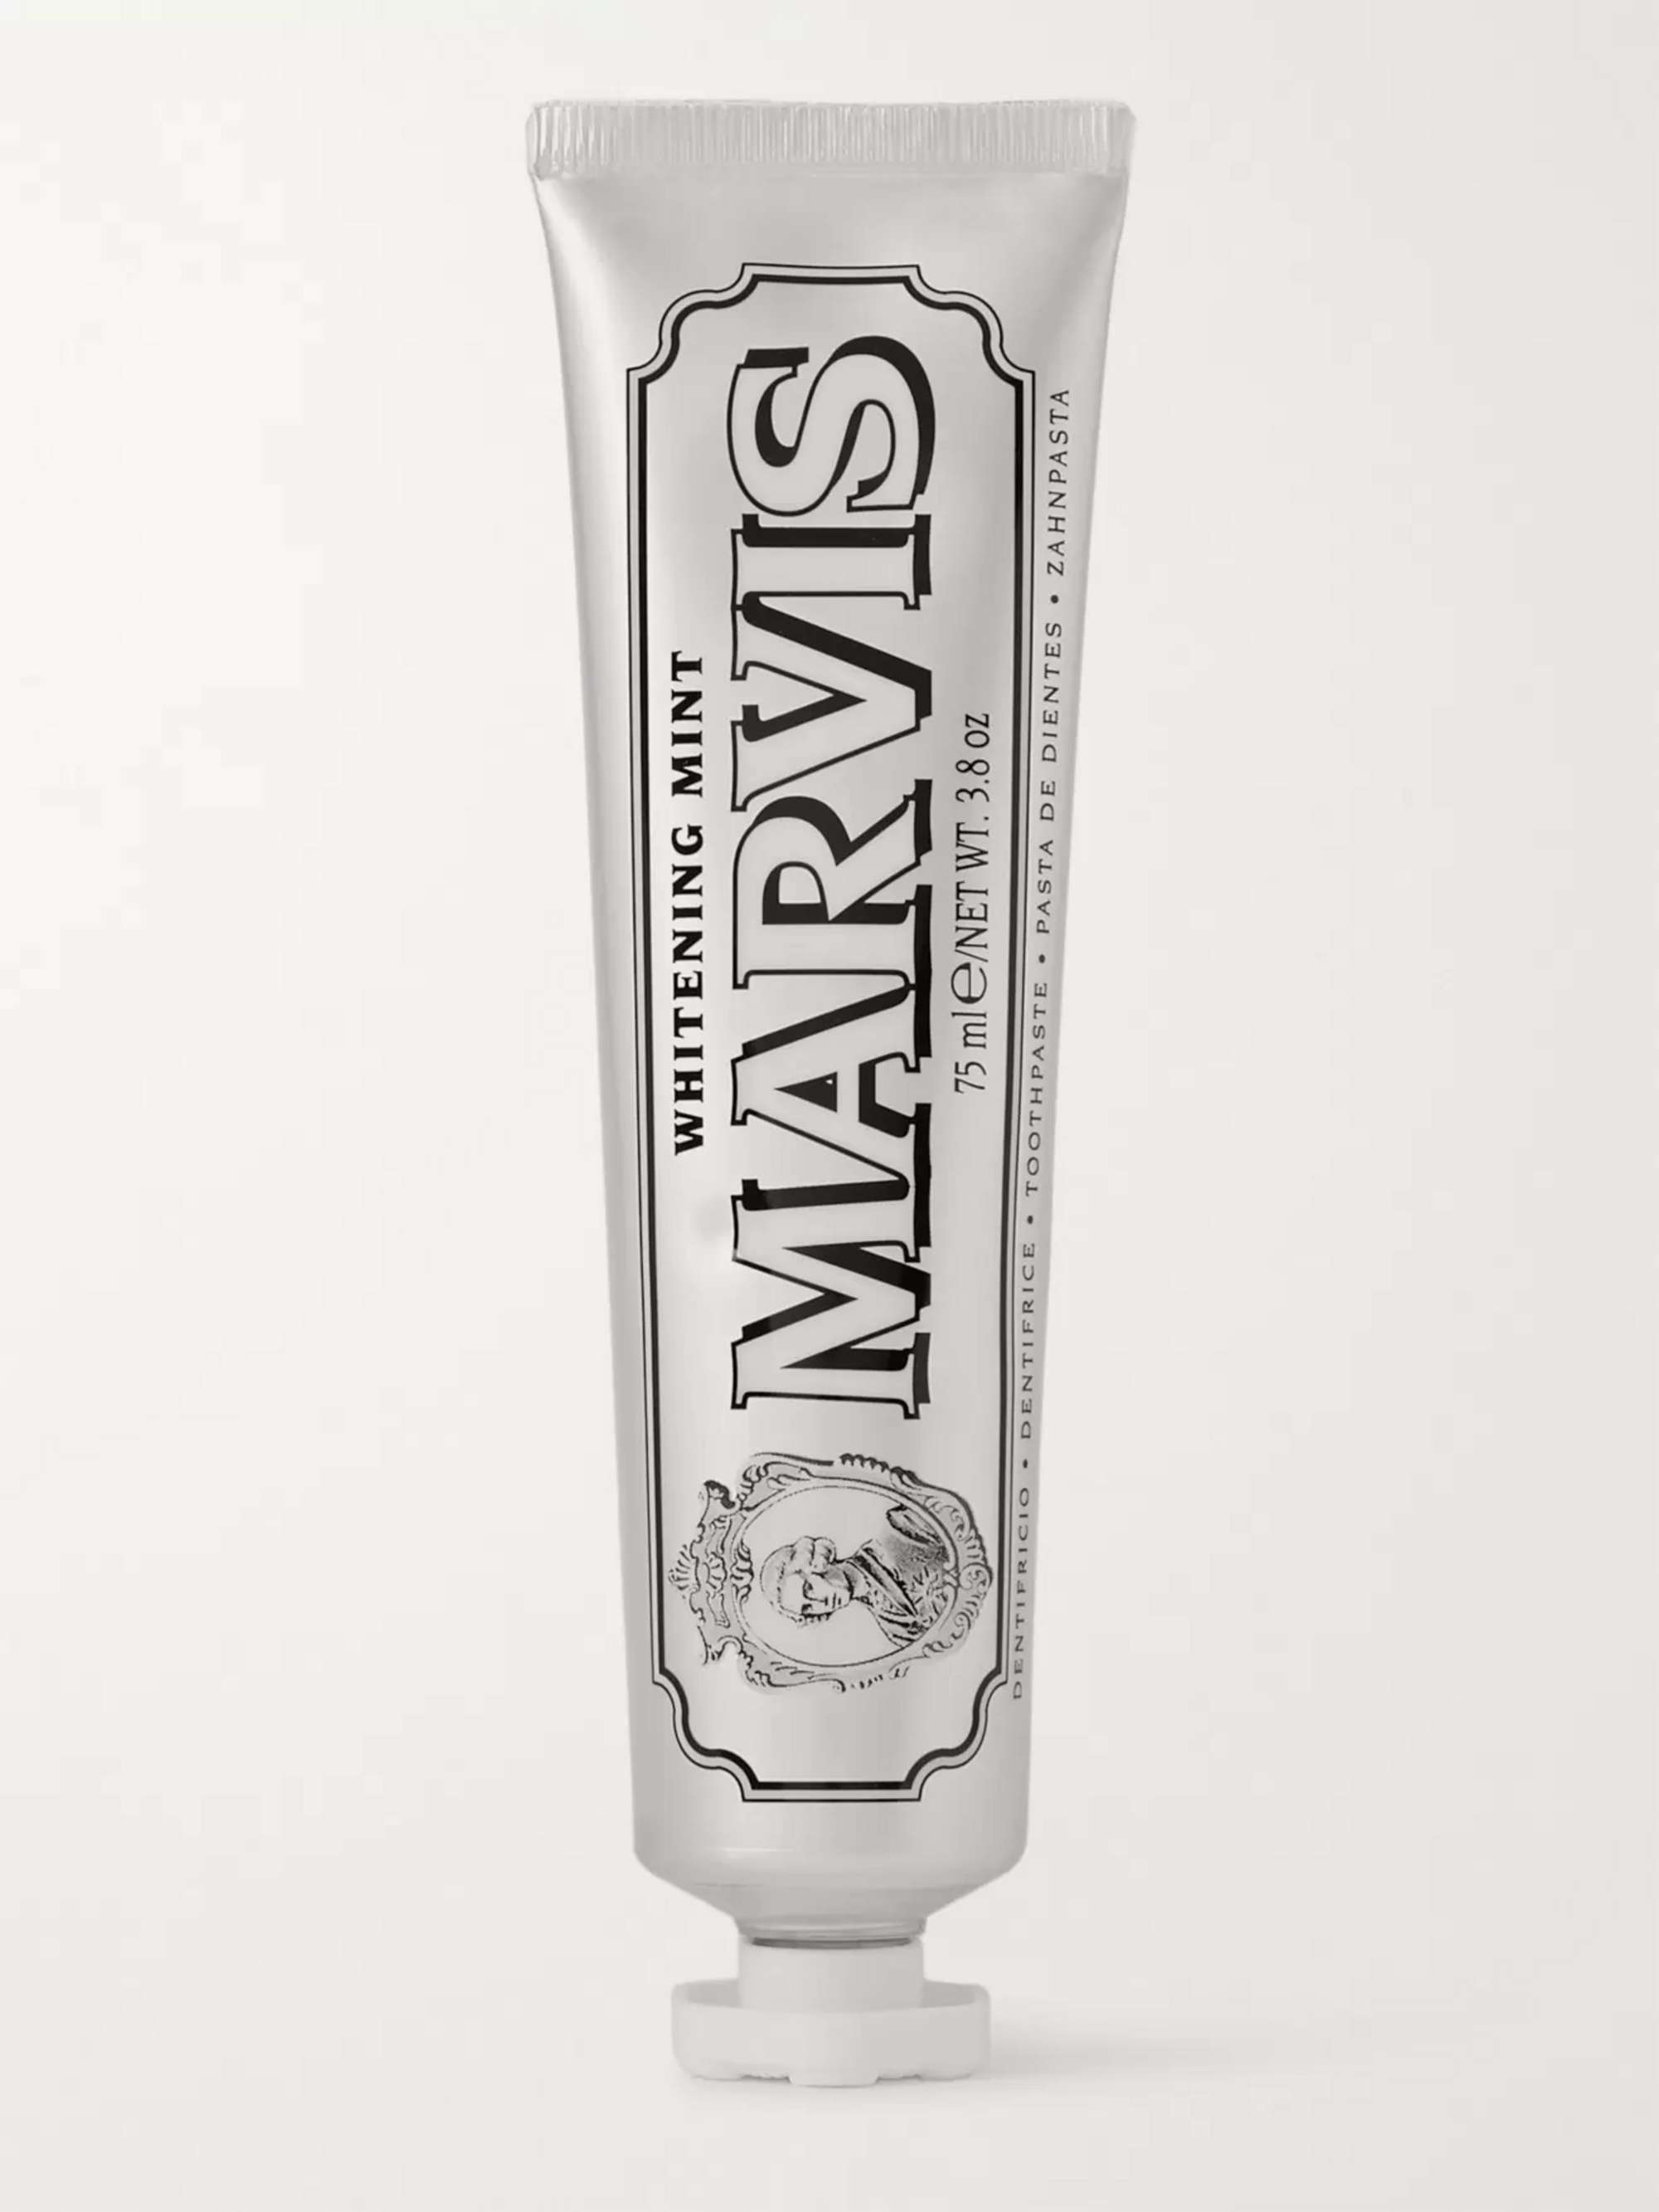 MARVIS Whitening Mint Toothpaste, 2 x 75ml | MR PORTER